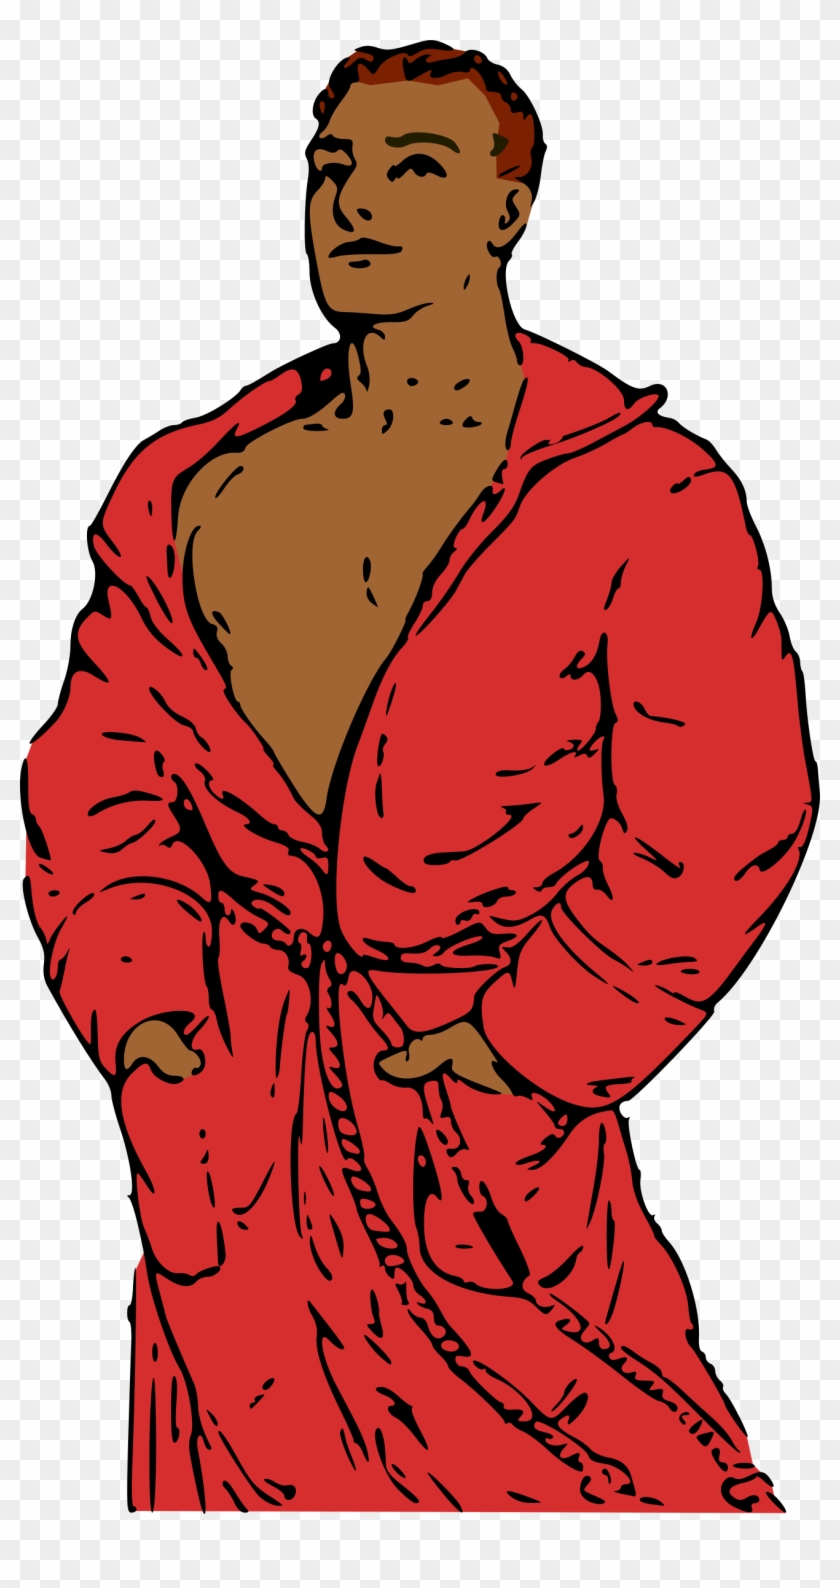 This Free Icons Png Design Of Man In Bathrobe 2 - Man In Bathrobe Cartoon Clipart #4229095